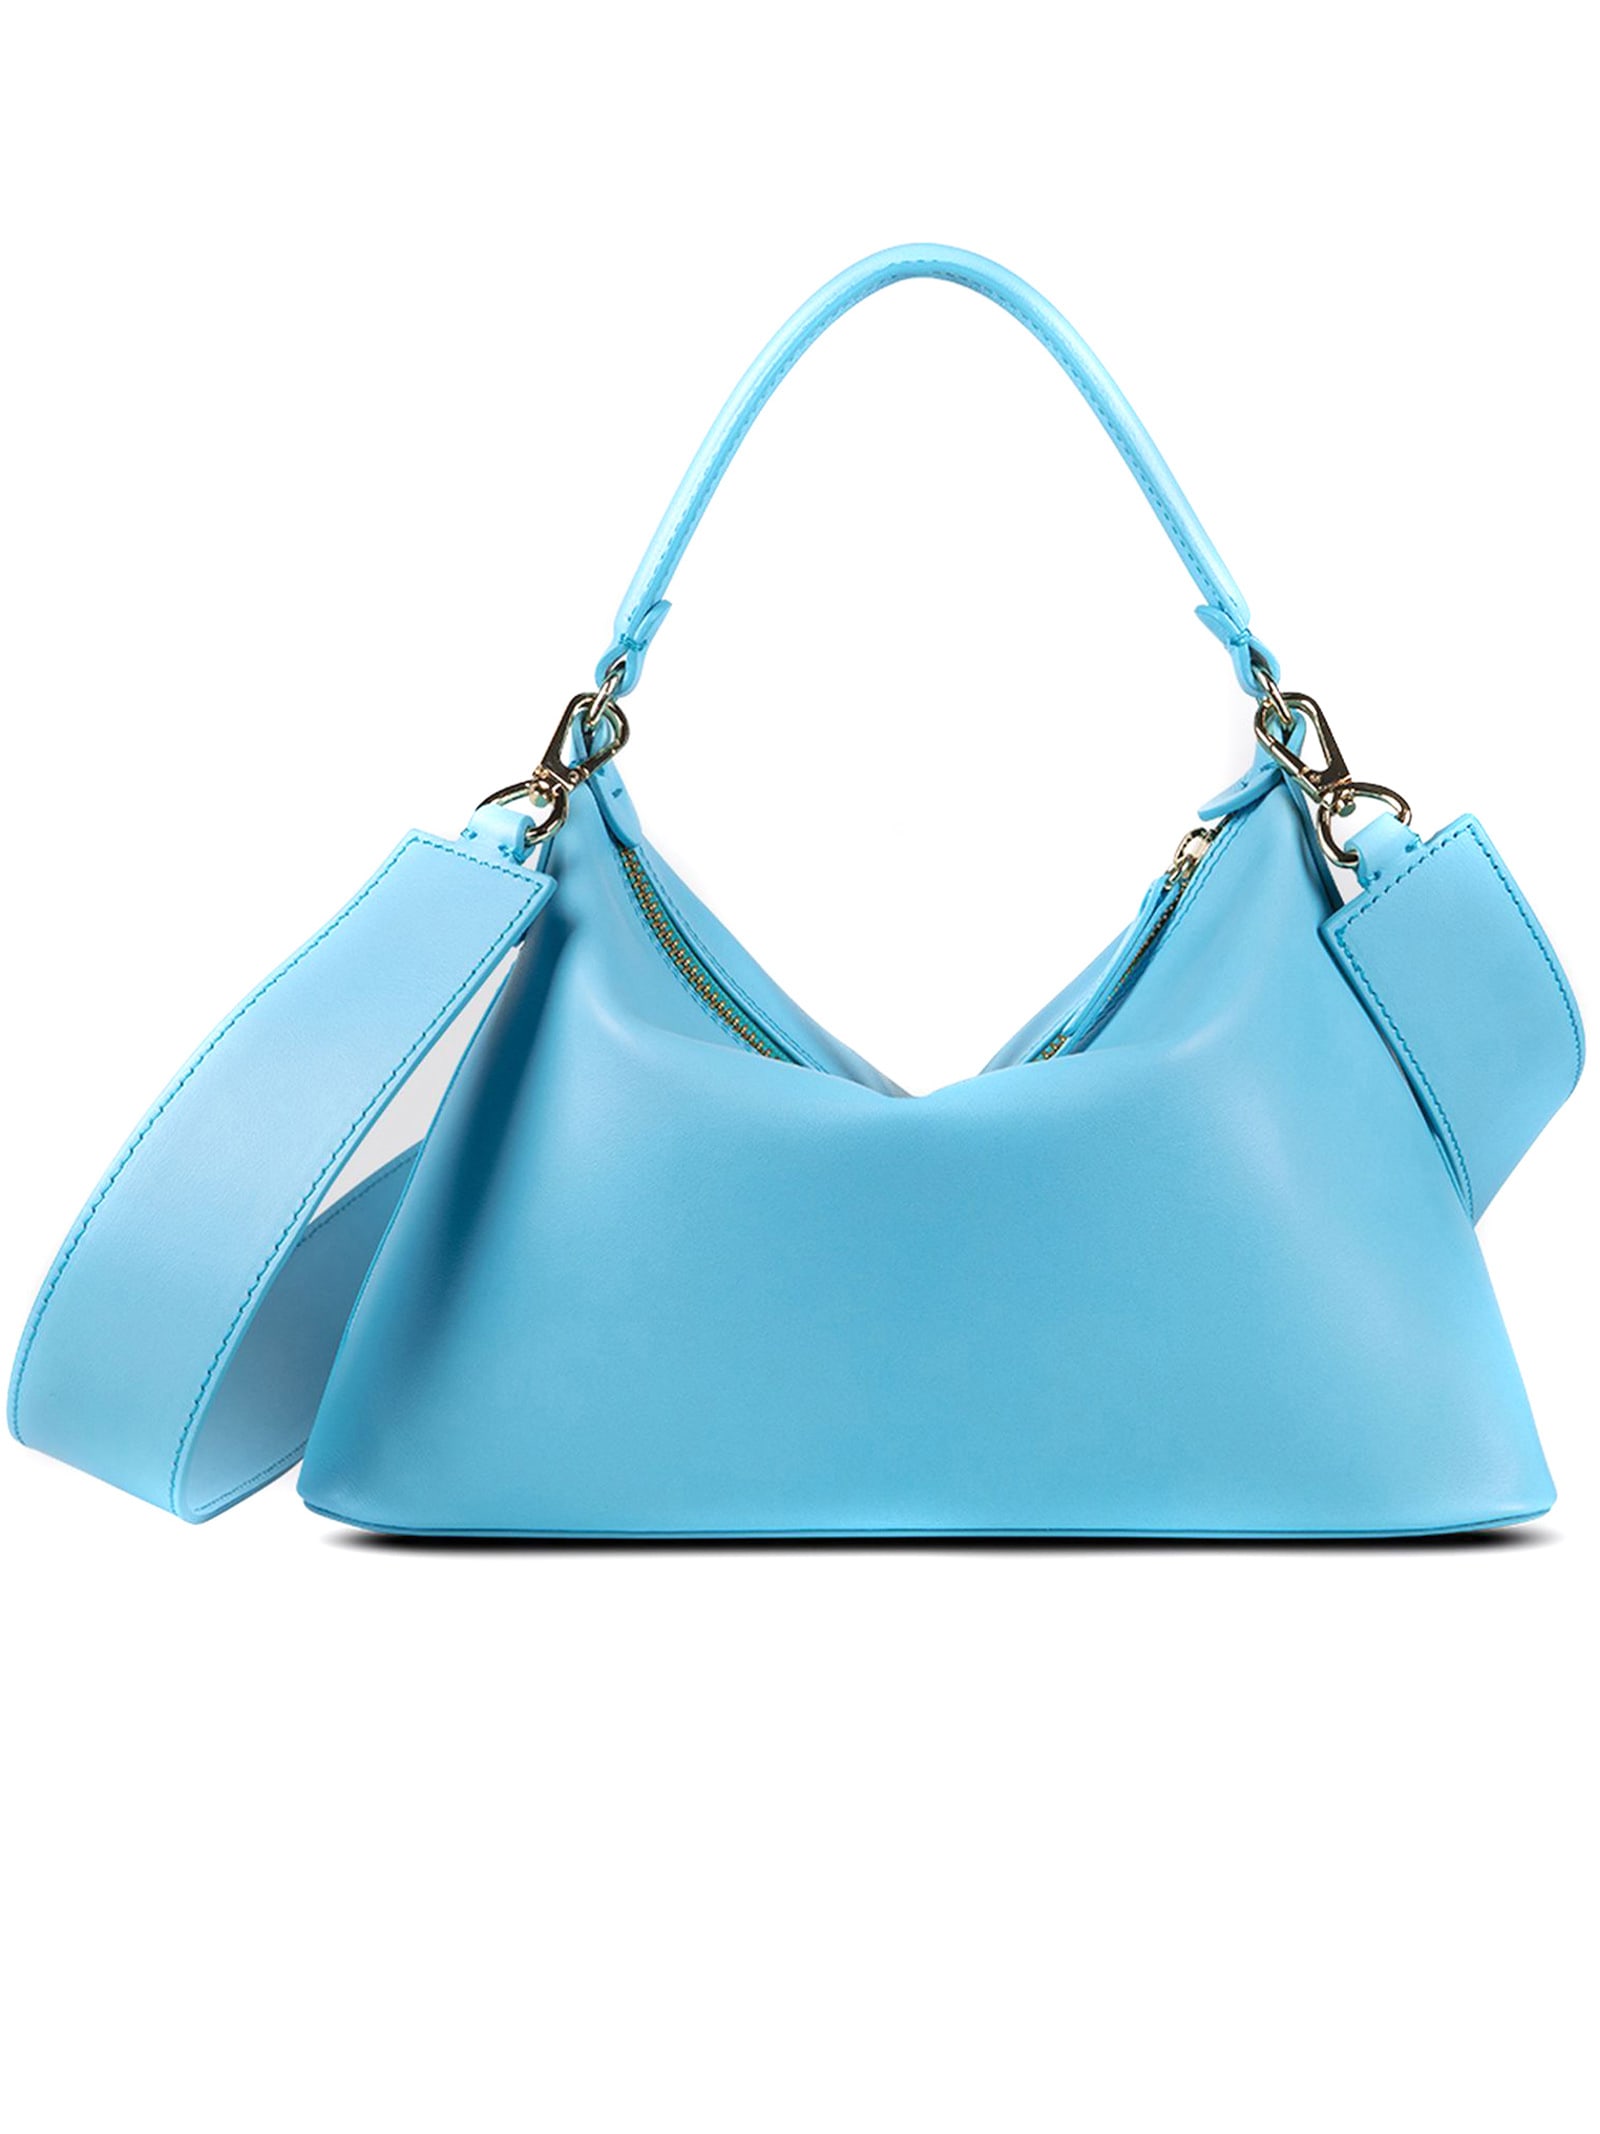 Leonie Hanne Light Blue Small Hobo Bag